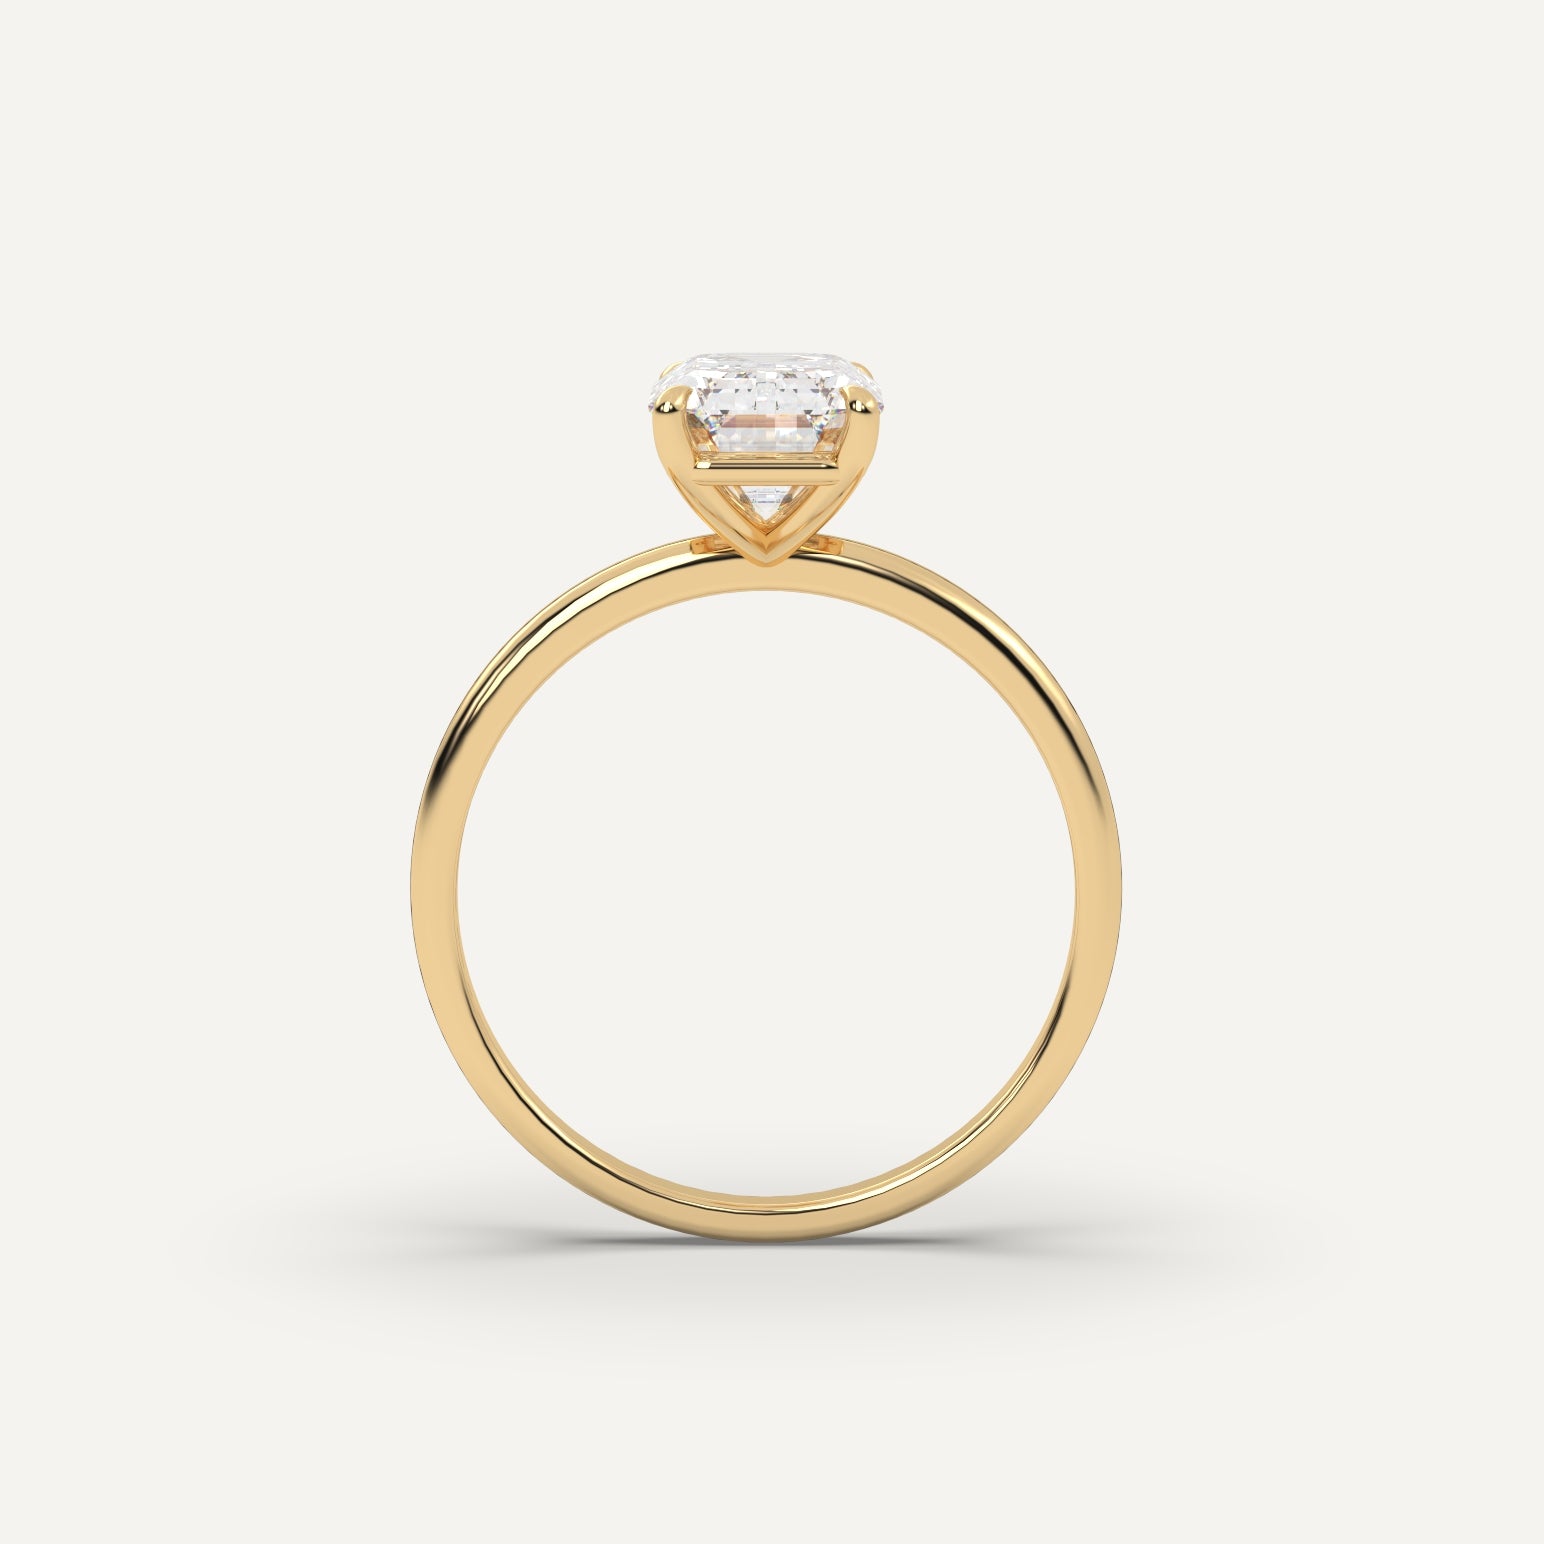 Emerald Cut Diamond Engagement Ring - 3 carat